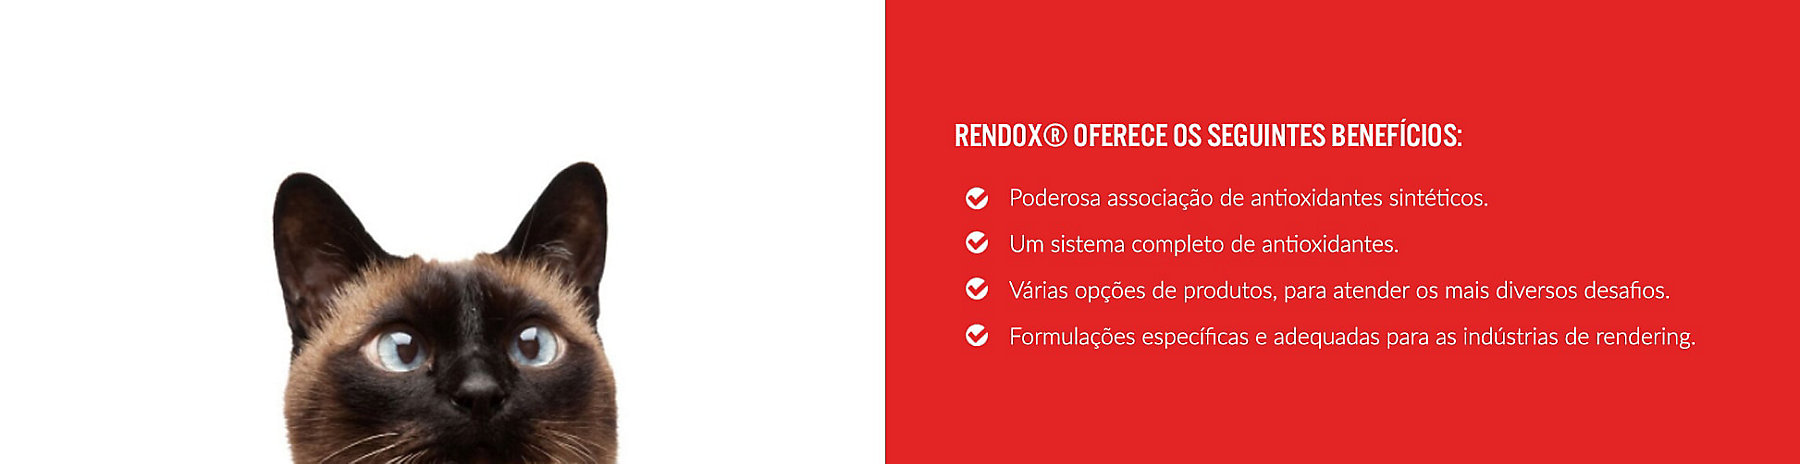 insiders-portuguese-rendox-min